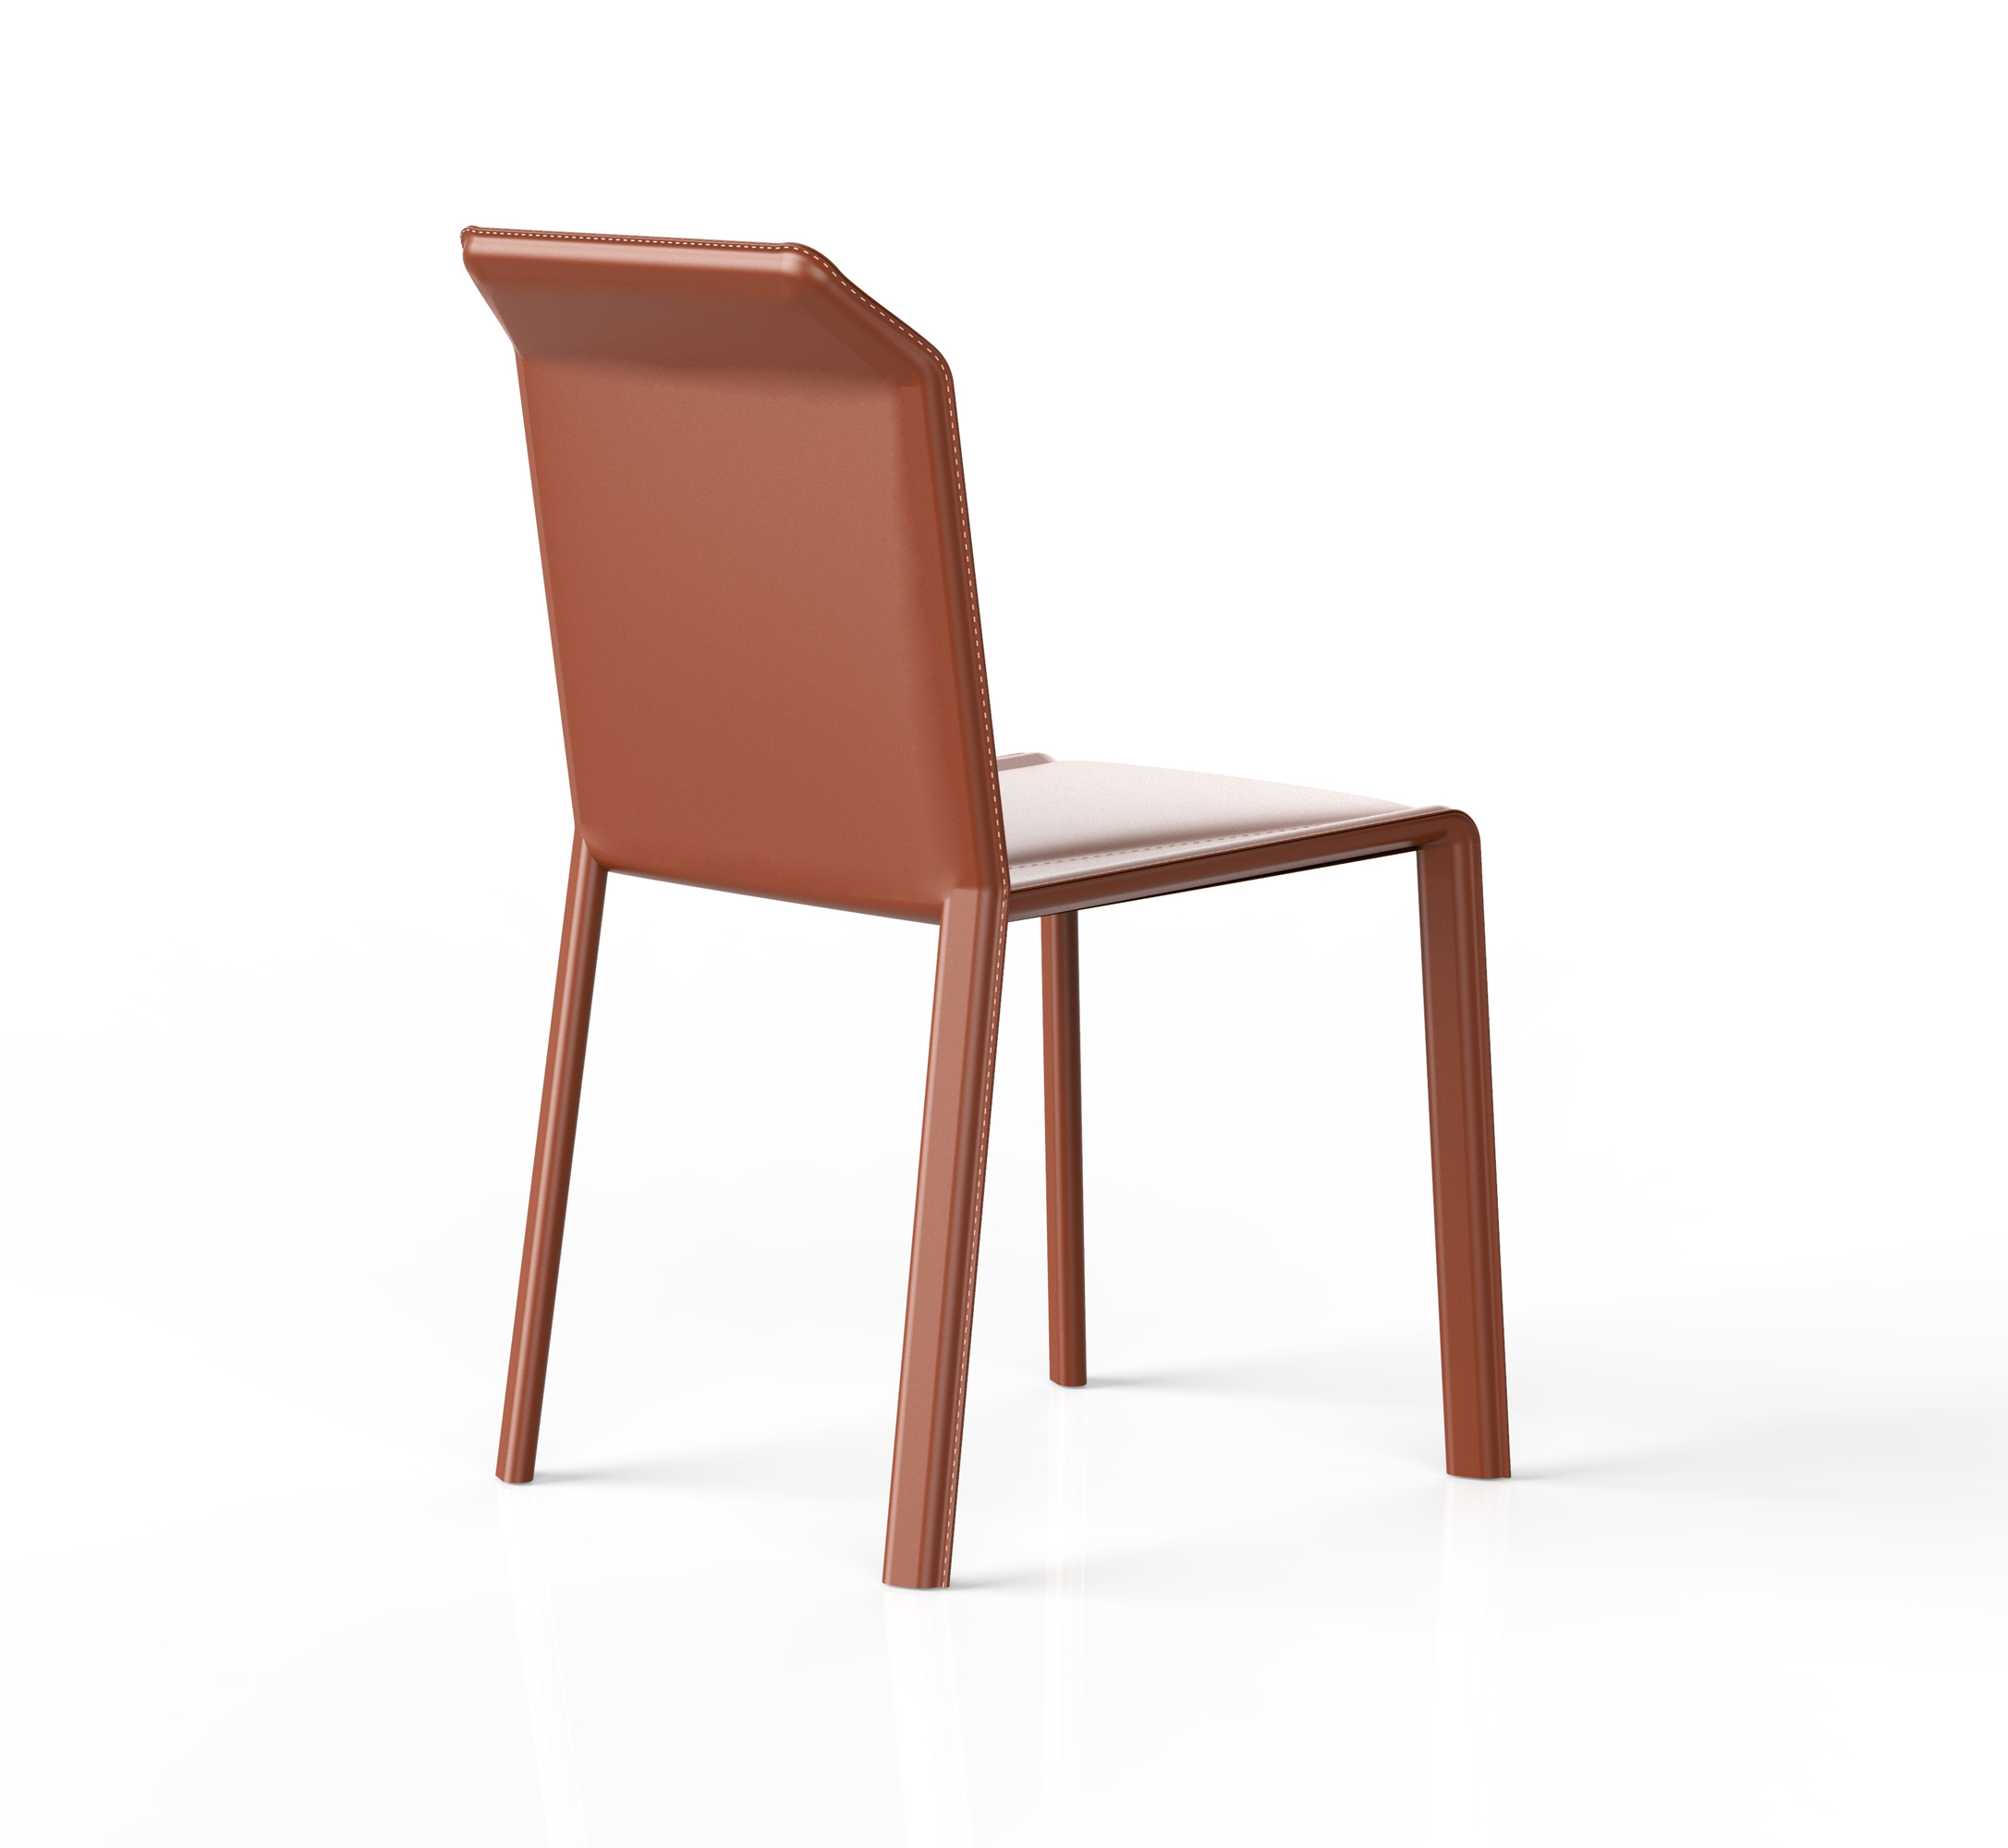 MisuraEmme_Brera_chair_design Francesco Lucchese_cut out 03